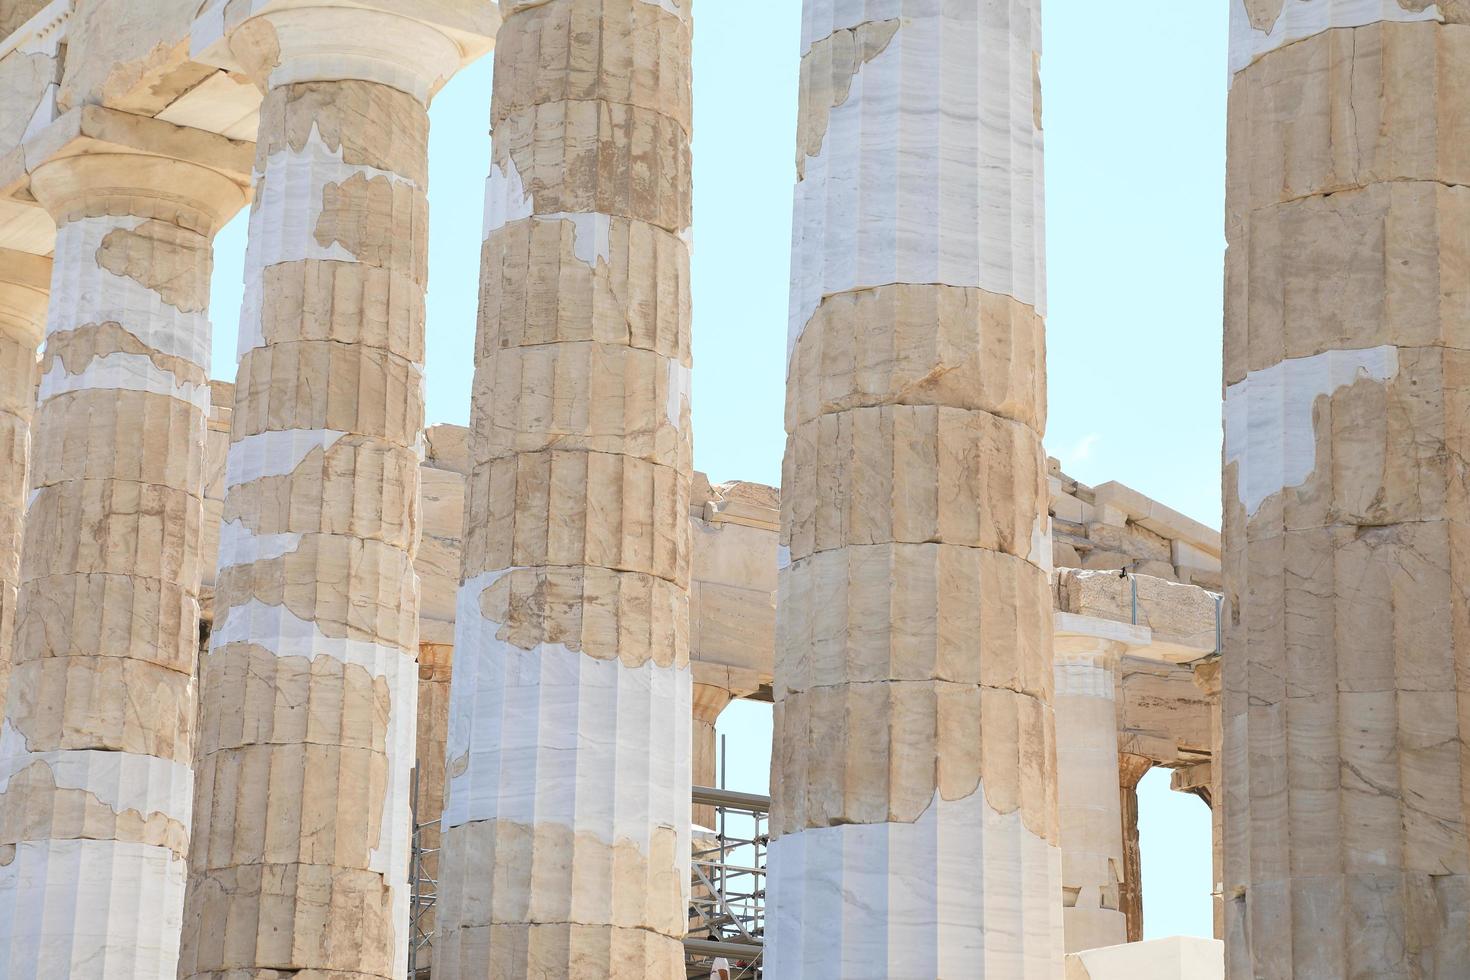 parthenon tempel op de akropolis van athene, griekenland foto